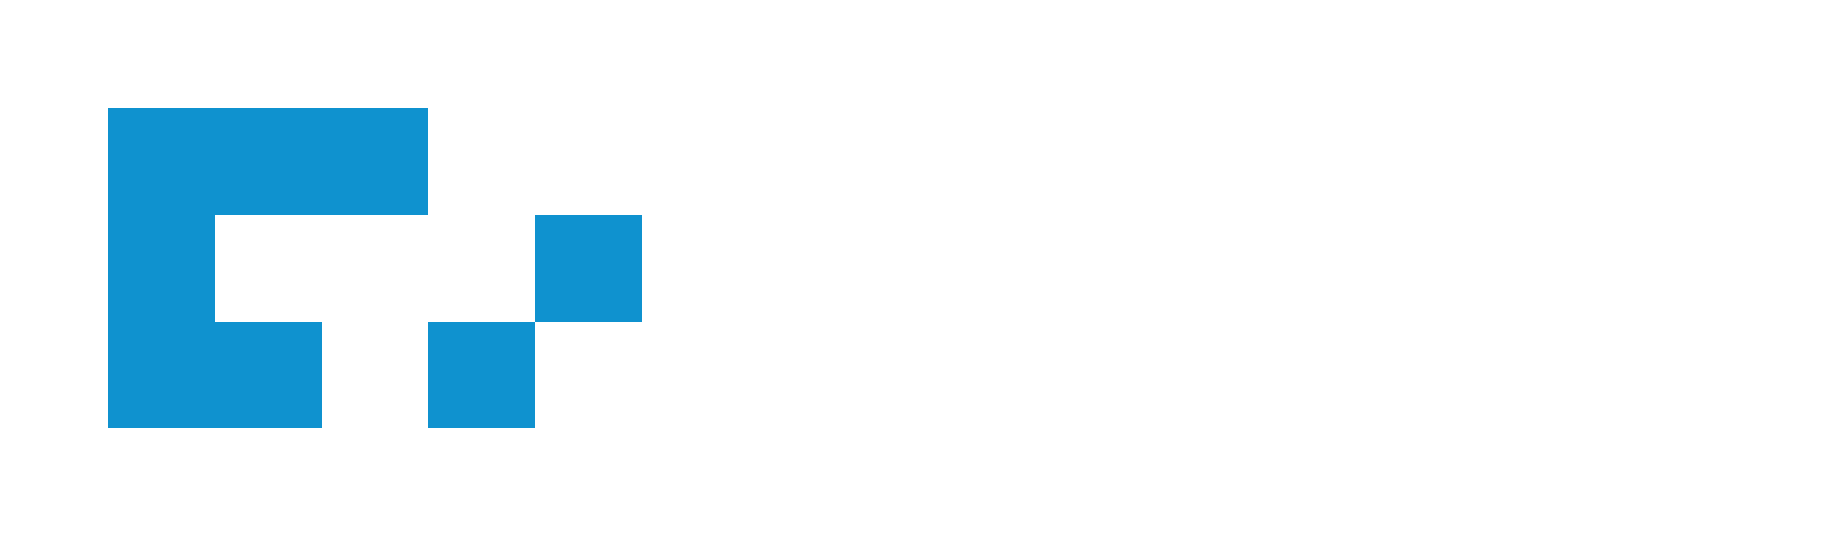 Craytive Technologies